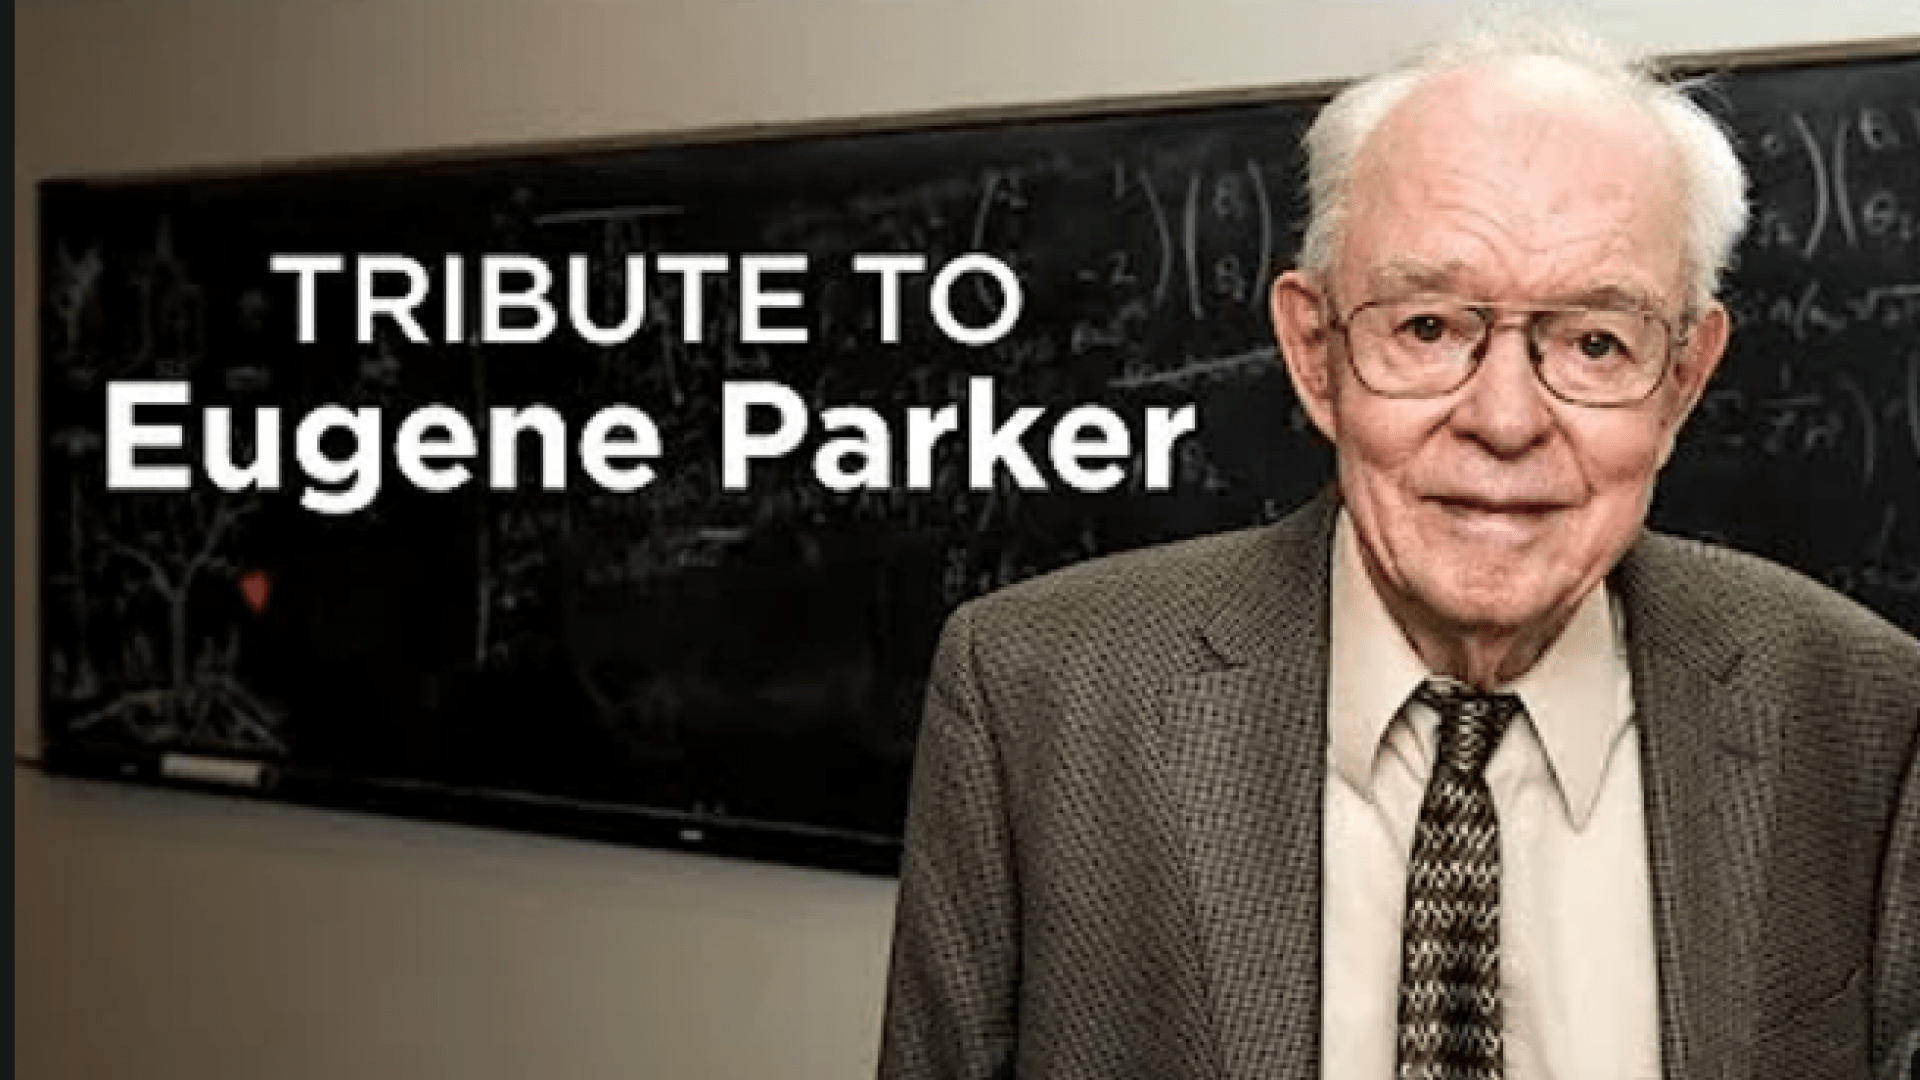 Photo of Eugene Parker that says "Tribute to Eugene Parker"